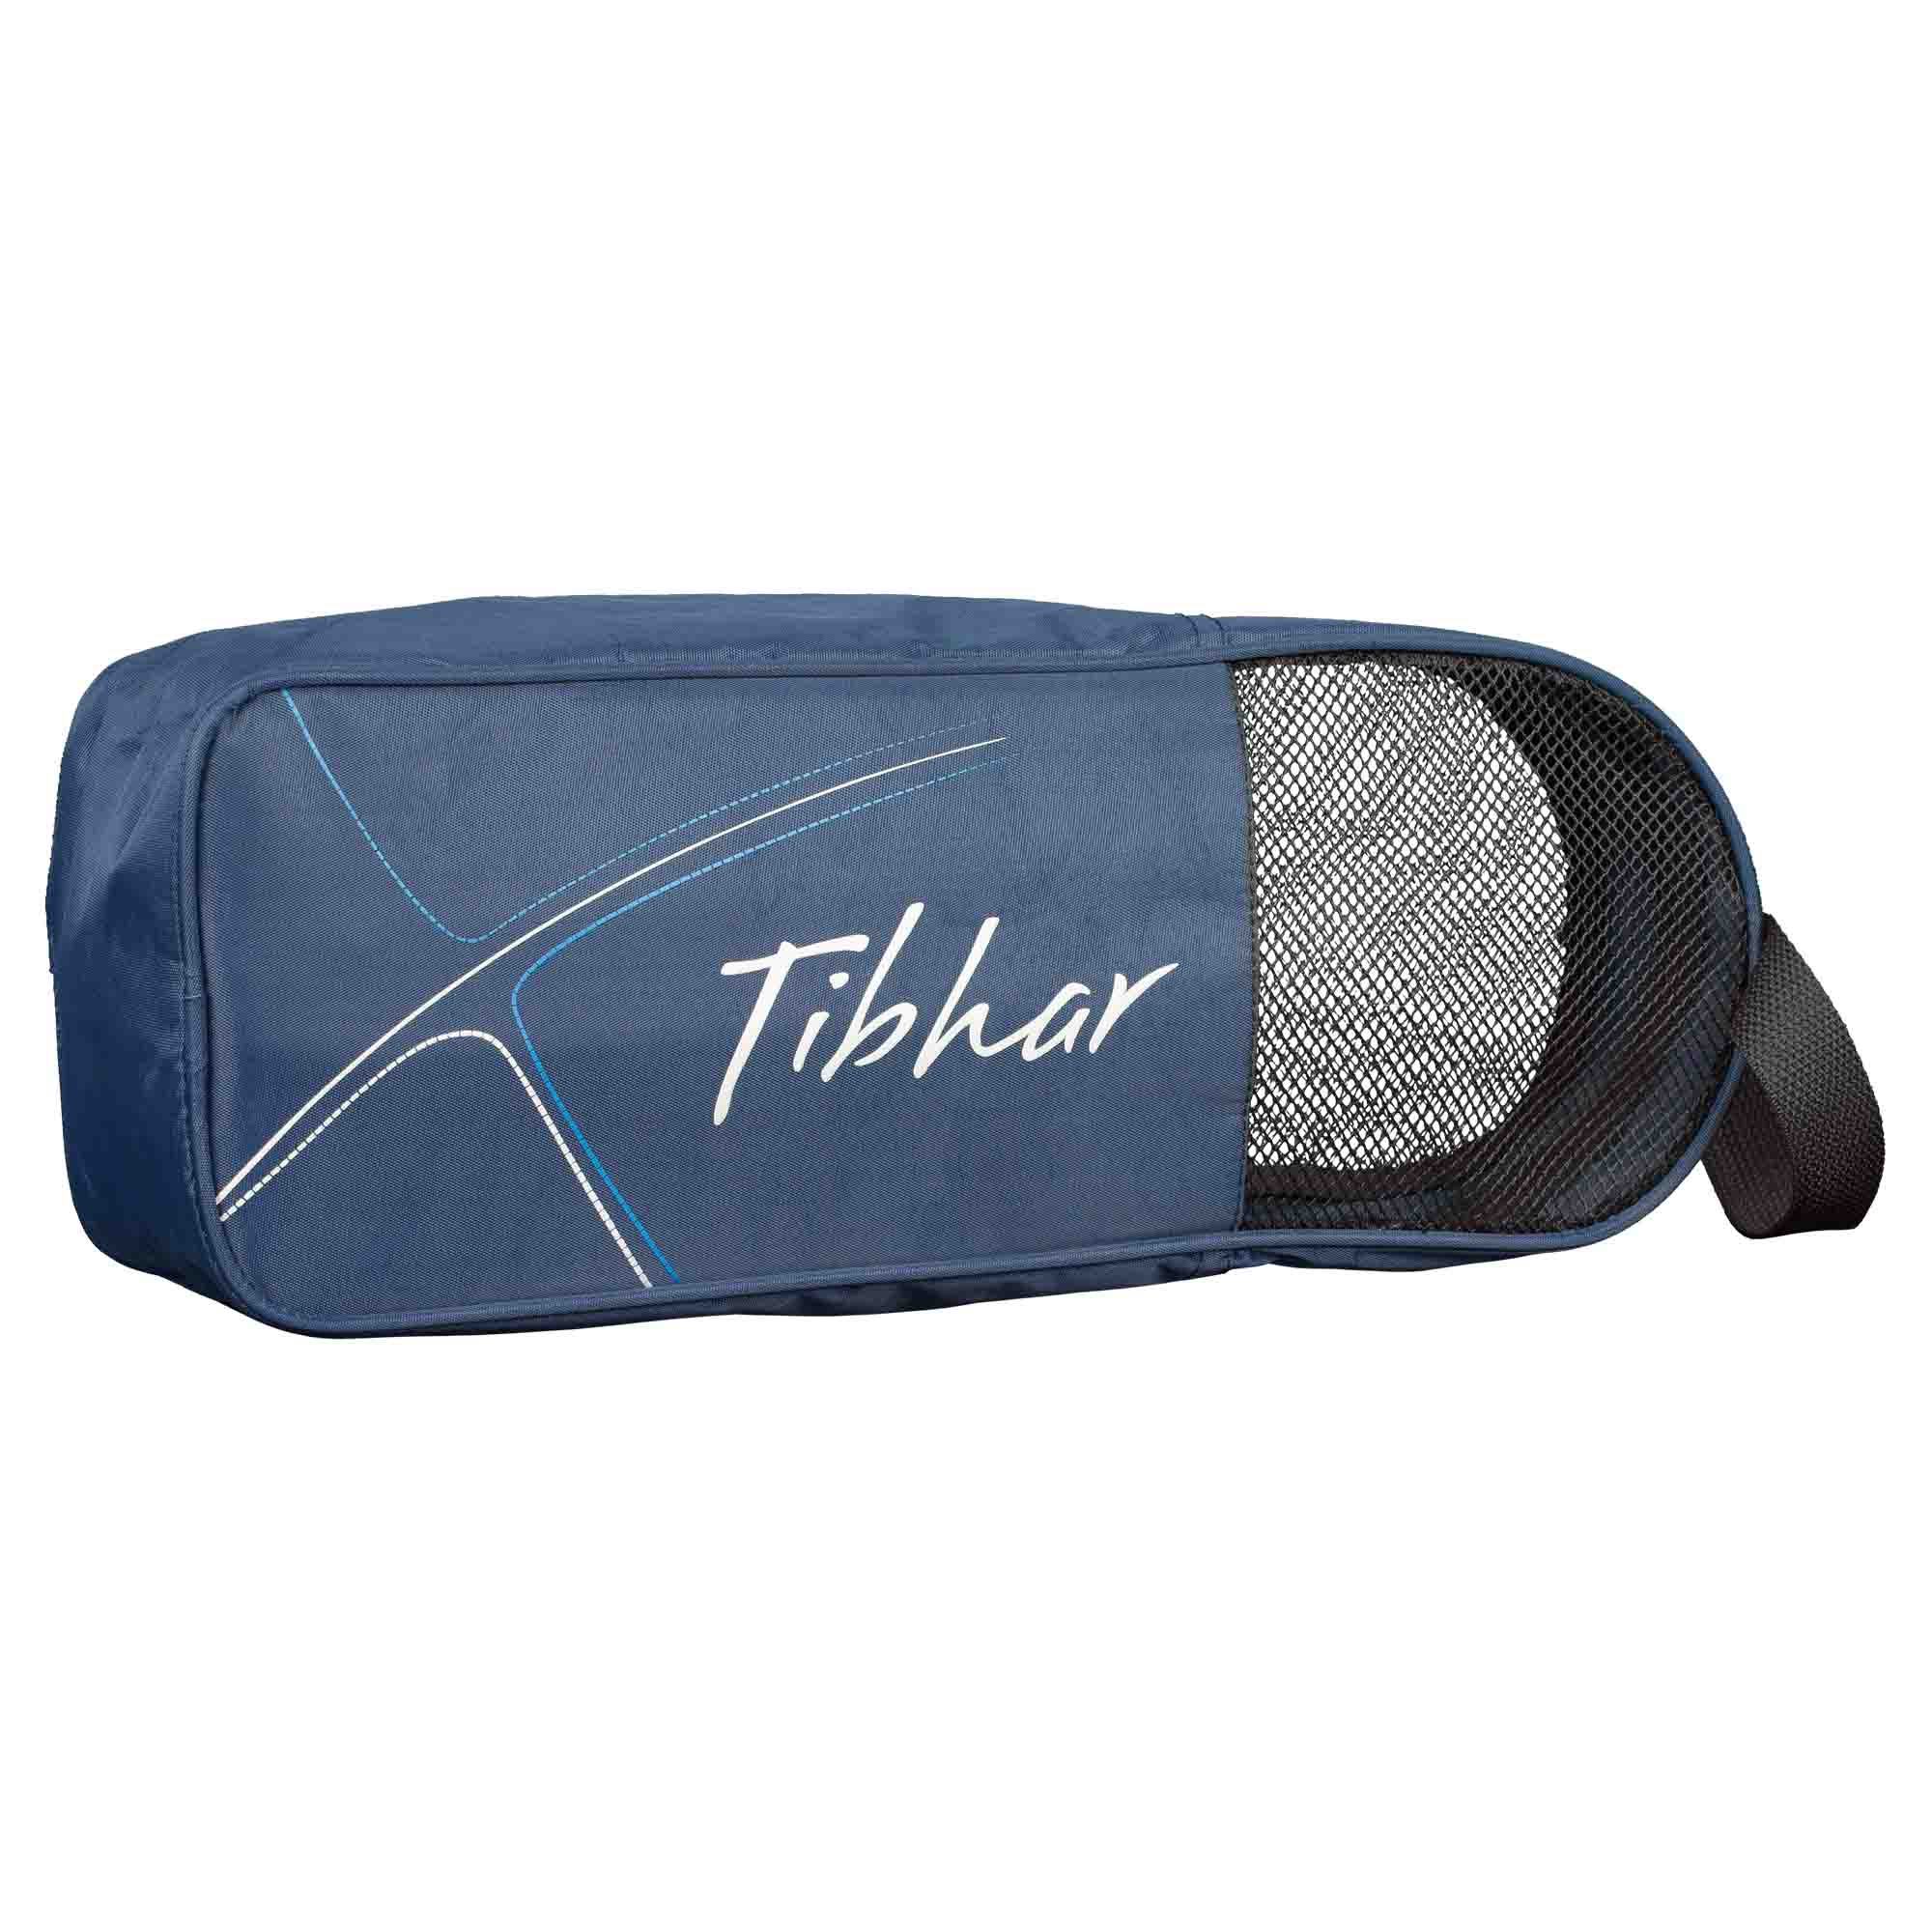 Tibhar Shoe bag Metro marine/blue